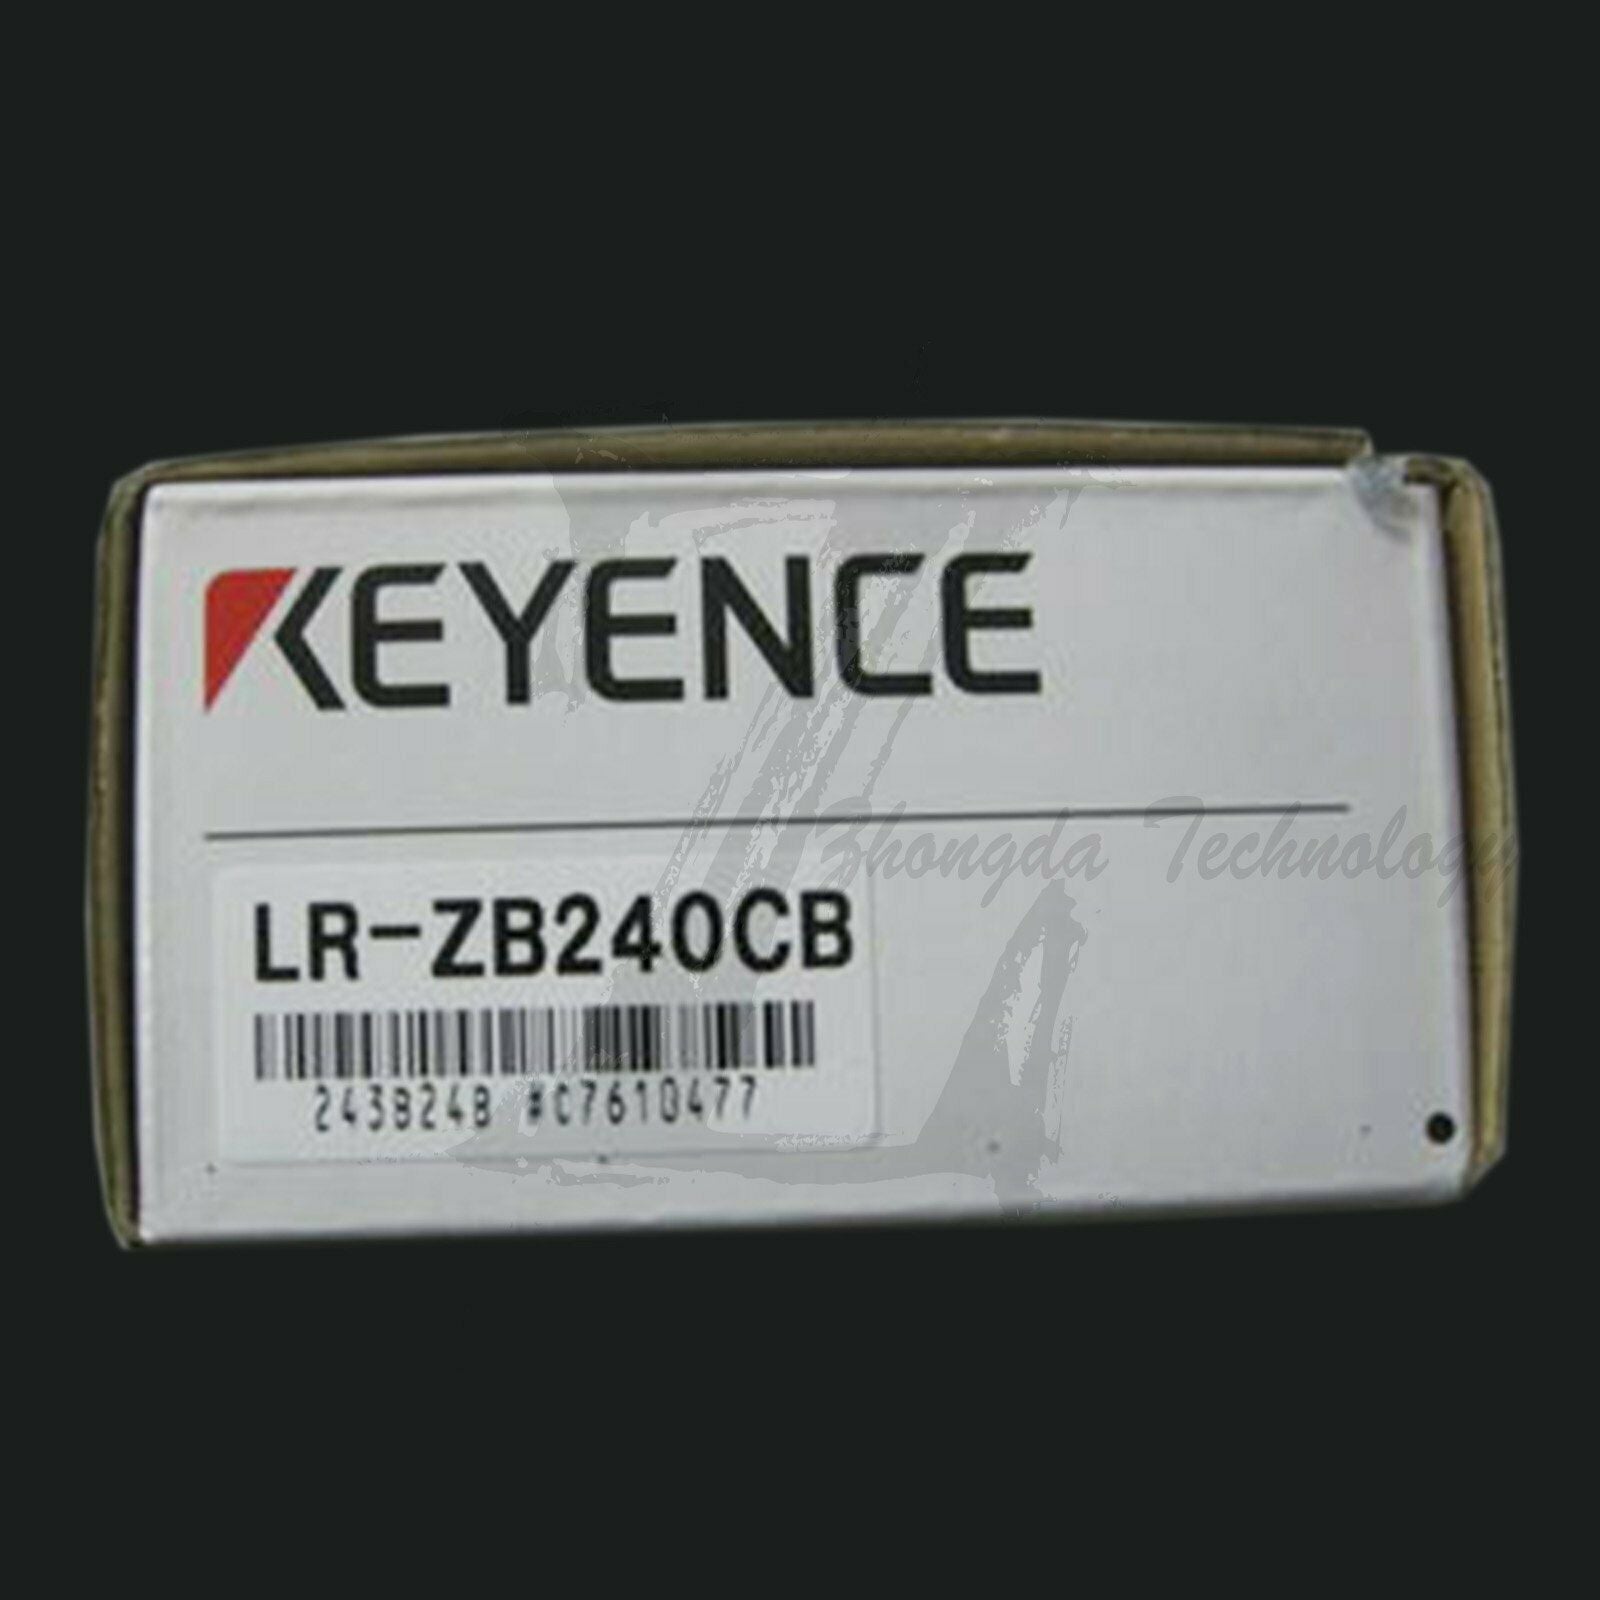 NEW IN BOX 1PCS Keyence laser sensor LR-ZB240CB